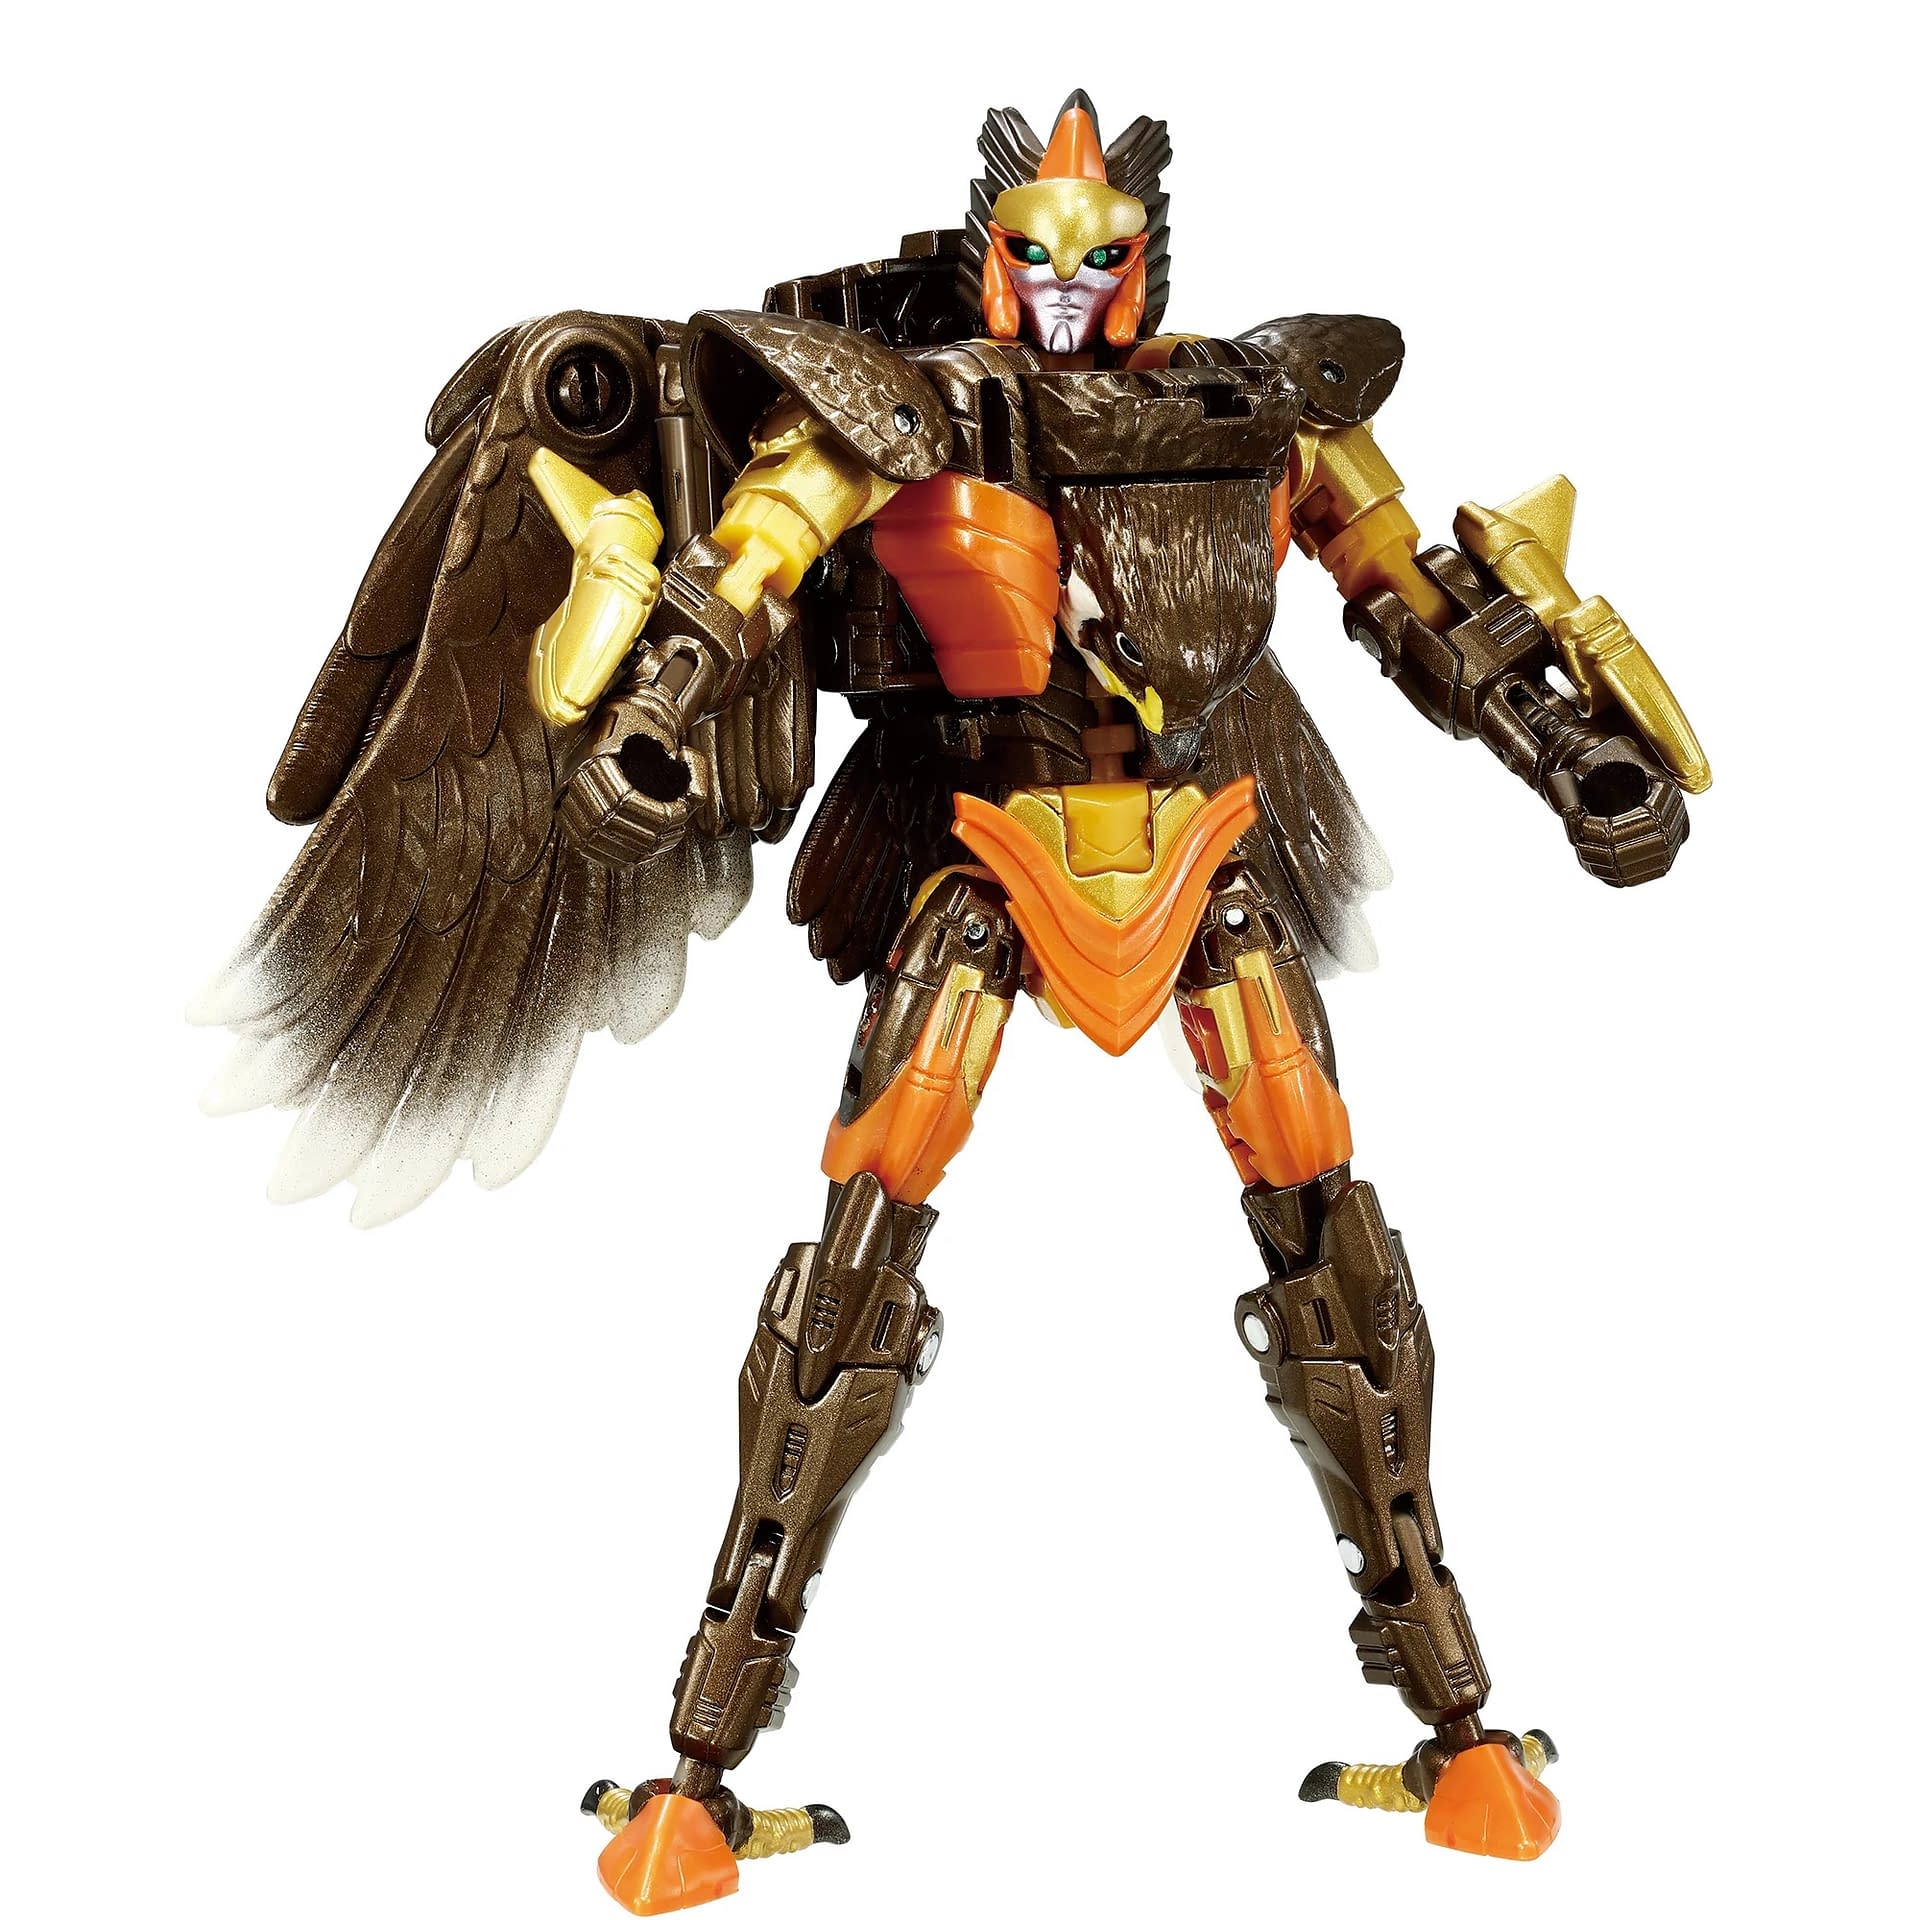 Airazor vs. Predacon Fight with New Hasbro Transformers Beast Wars Set